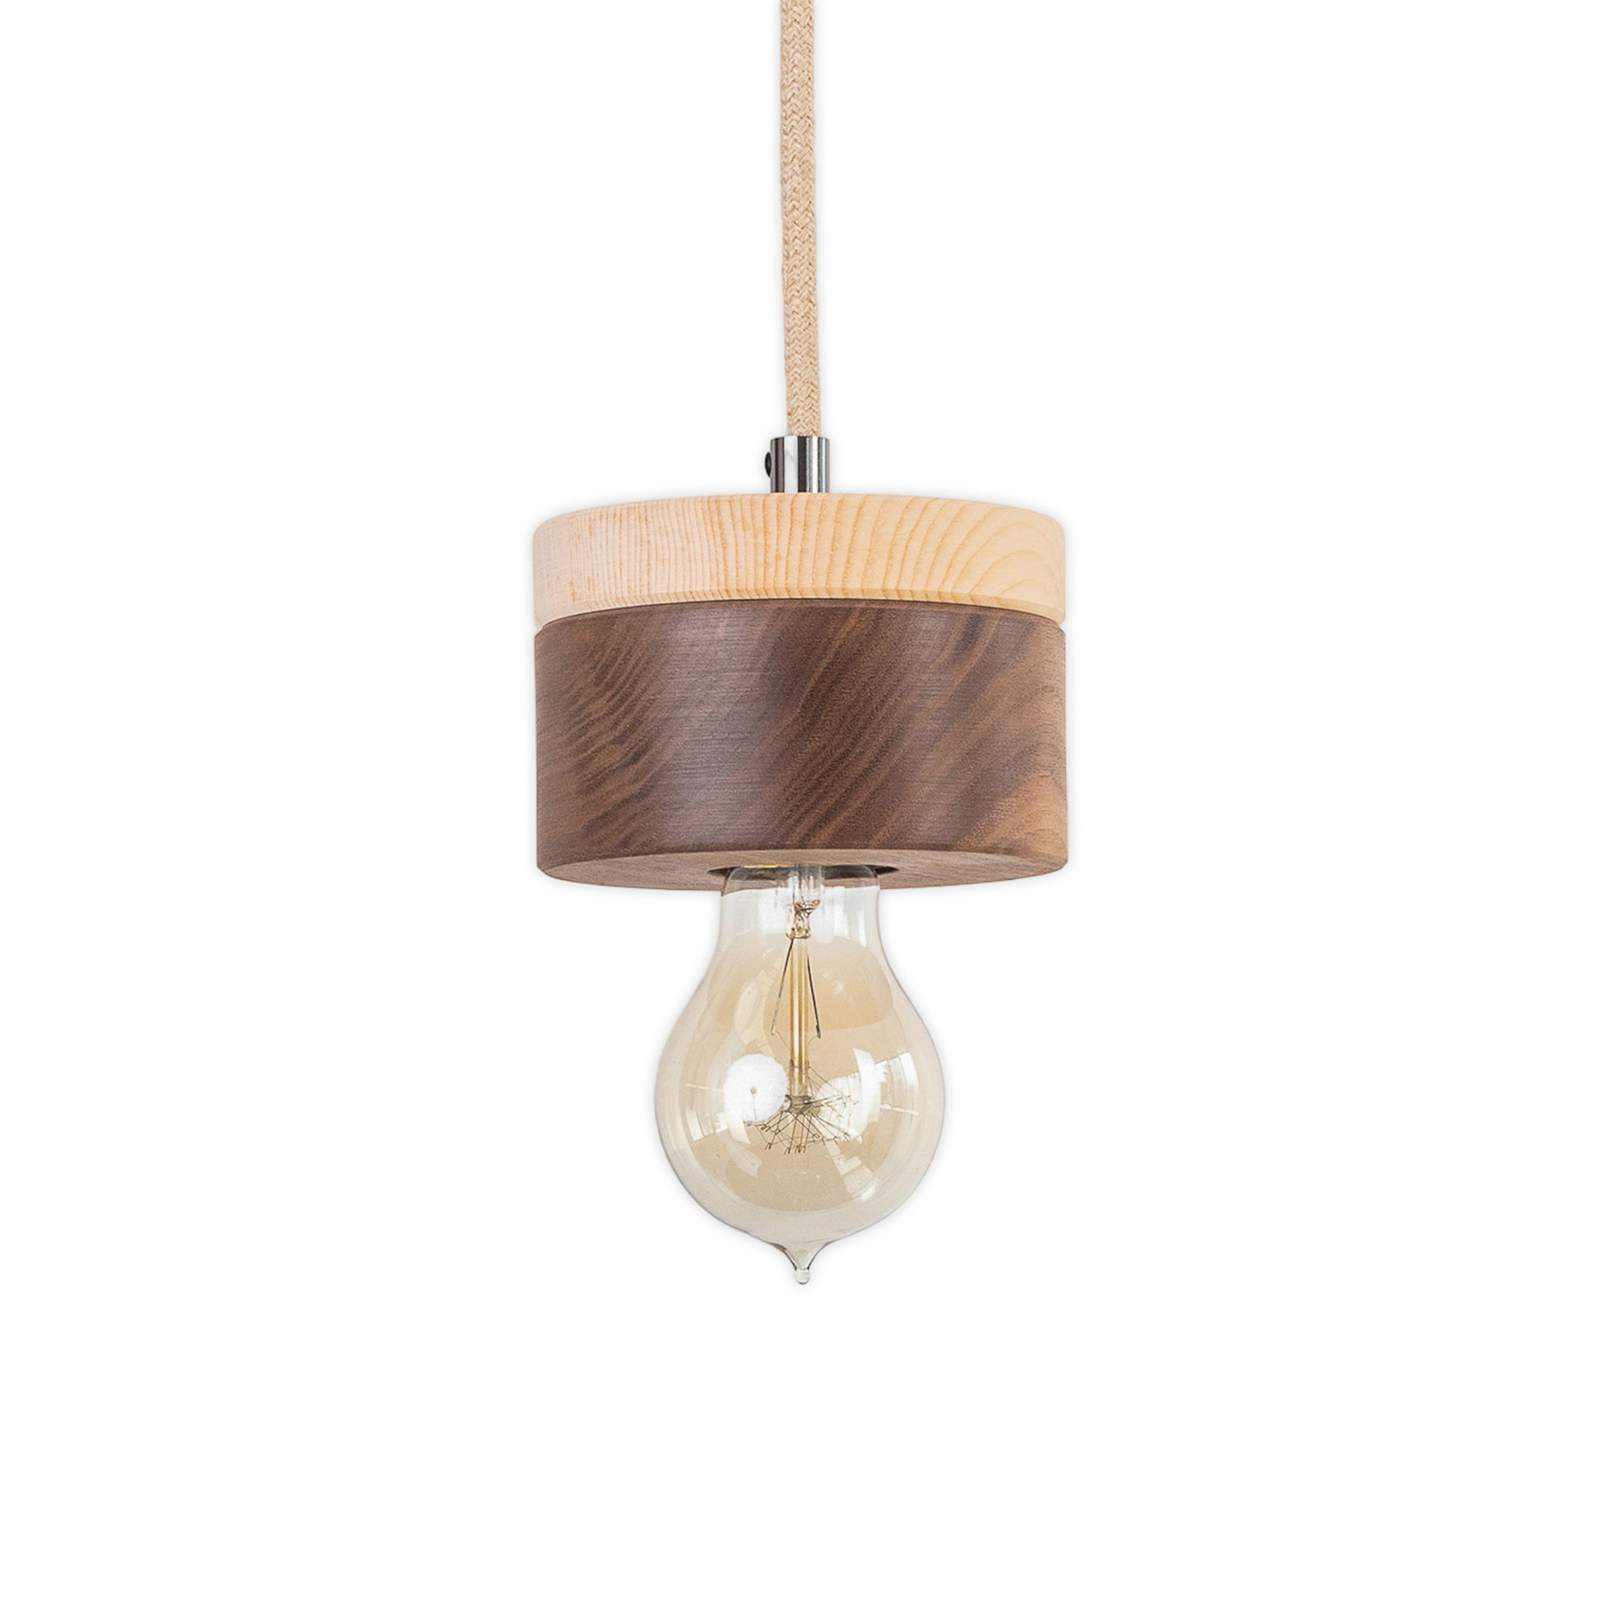 ALMUT 0239 hanging light, vegan, walnut/Swiss pine